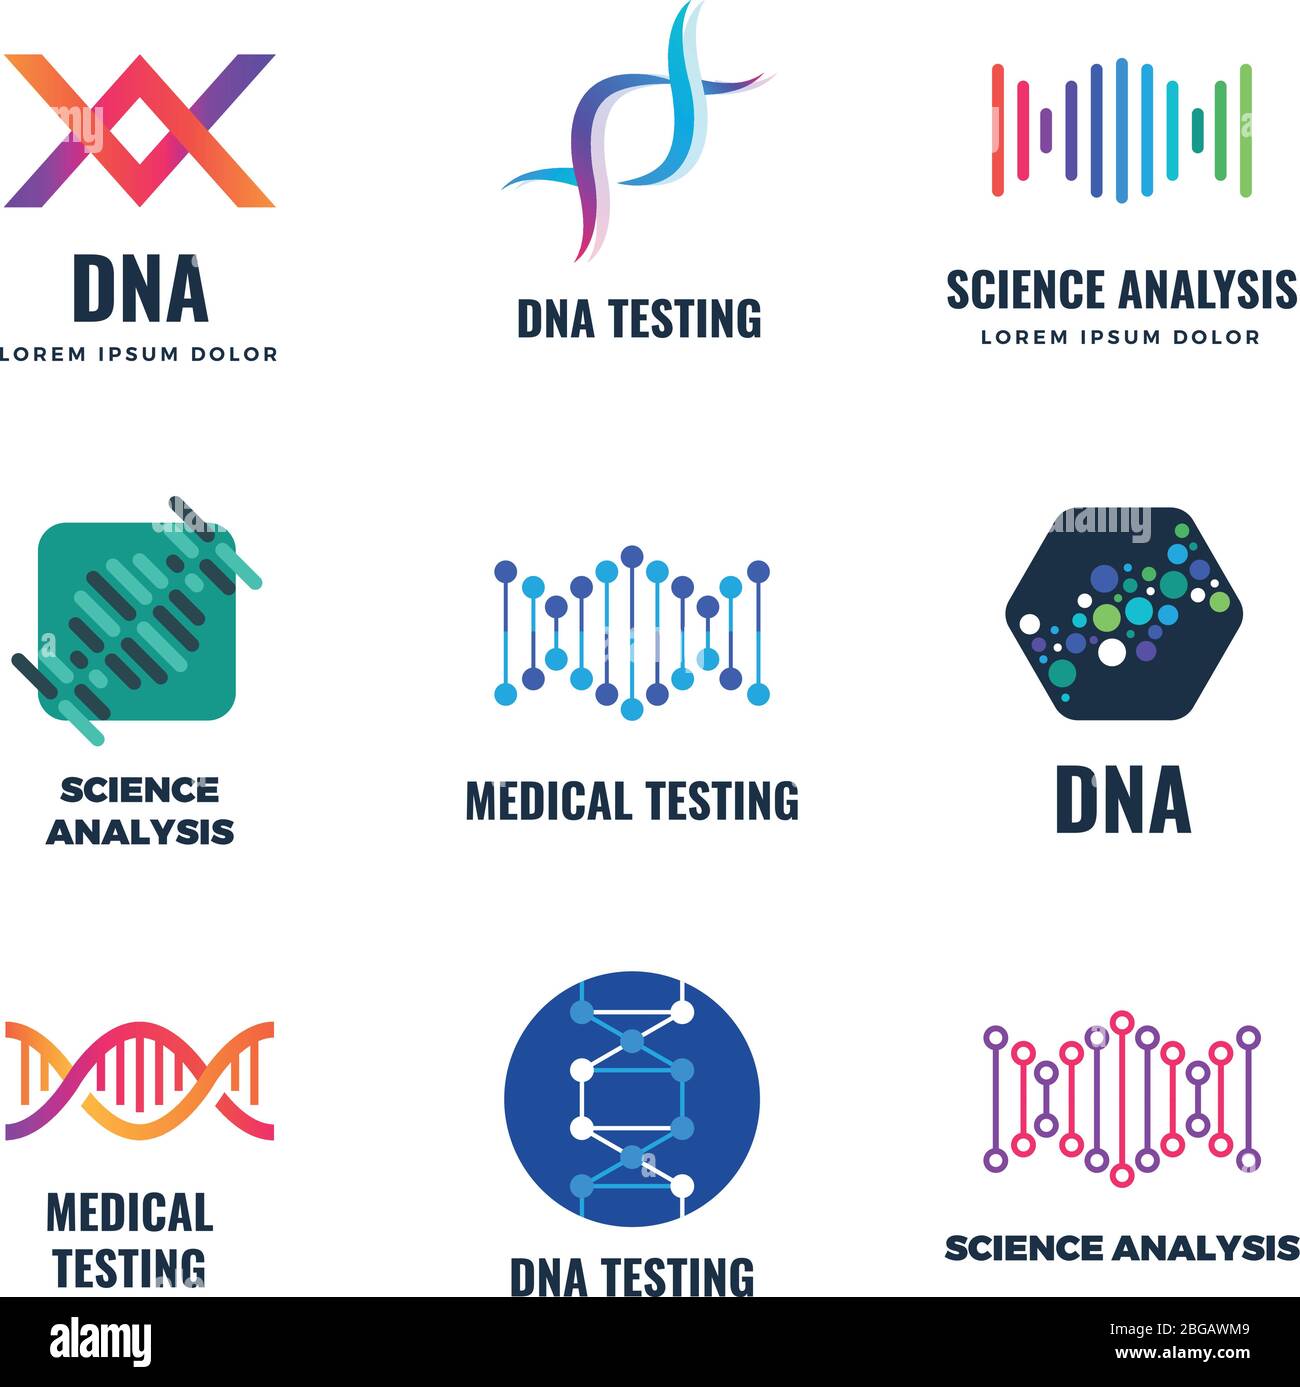 DNA-Code Biotech Vektor Wissenschaft Genetik Logo. Helix Molekül Biotechnologie Embleme mit dna-Genspirale, Biotechnologie Genom Chromosom. Vektorgrafik Stock Vektor